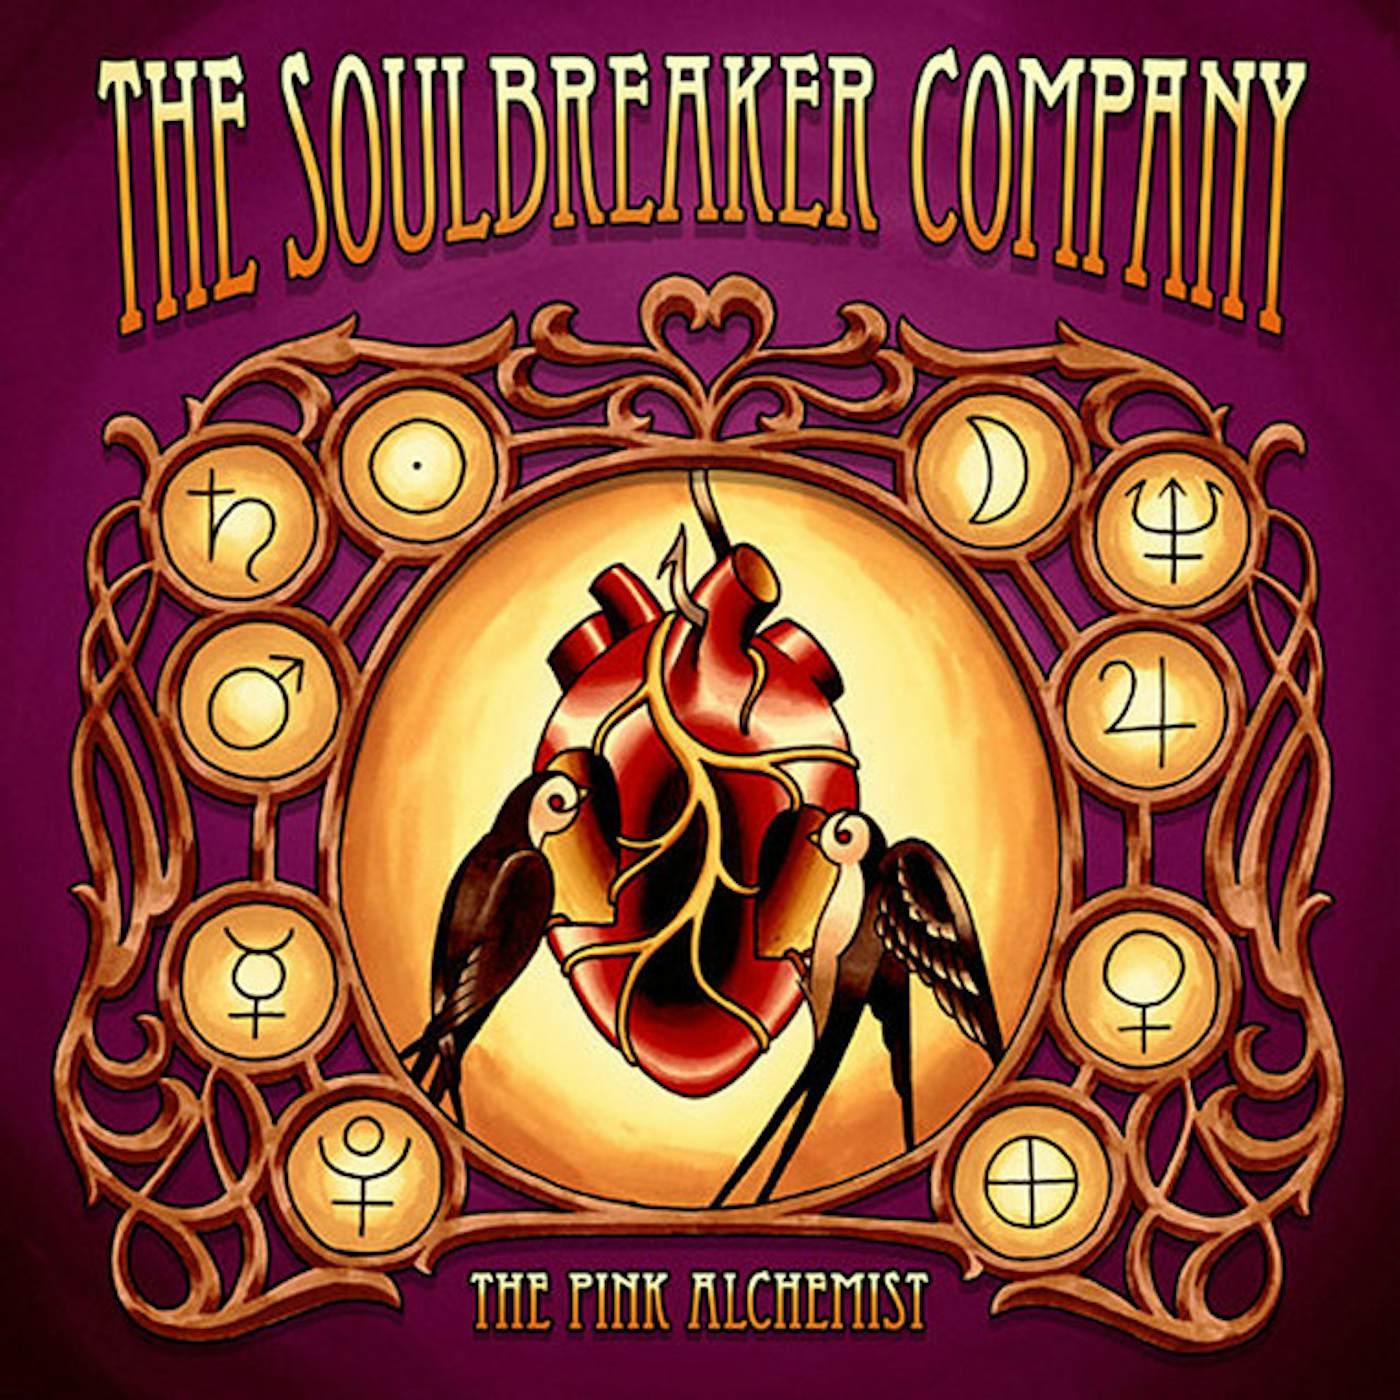 The Soulbreaker Company PINK ALCHEMIST Vinyl Record